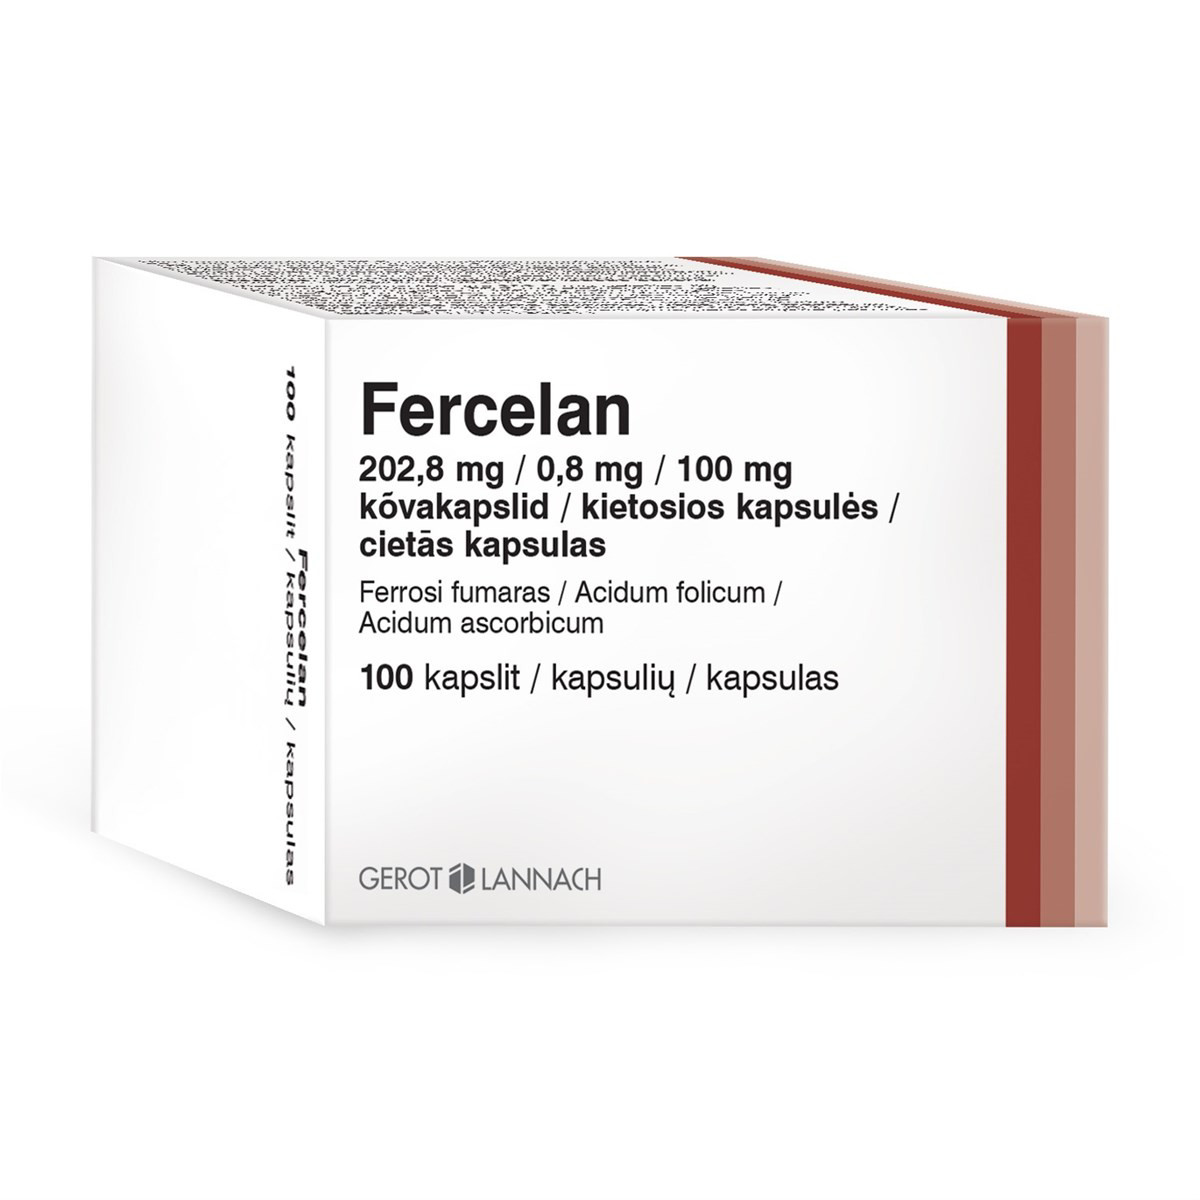 FERCELAN, 202,8 mg/0,8 mg/100 mg, kietosios kapsulės, N100